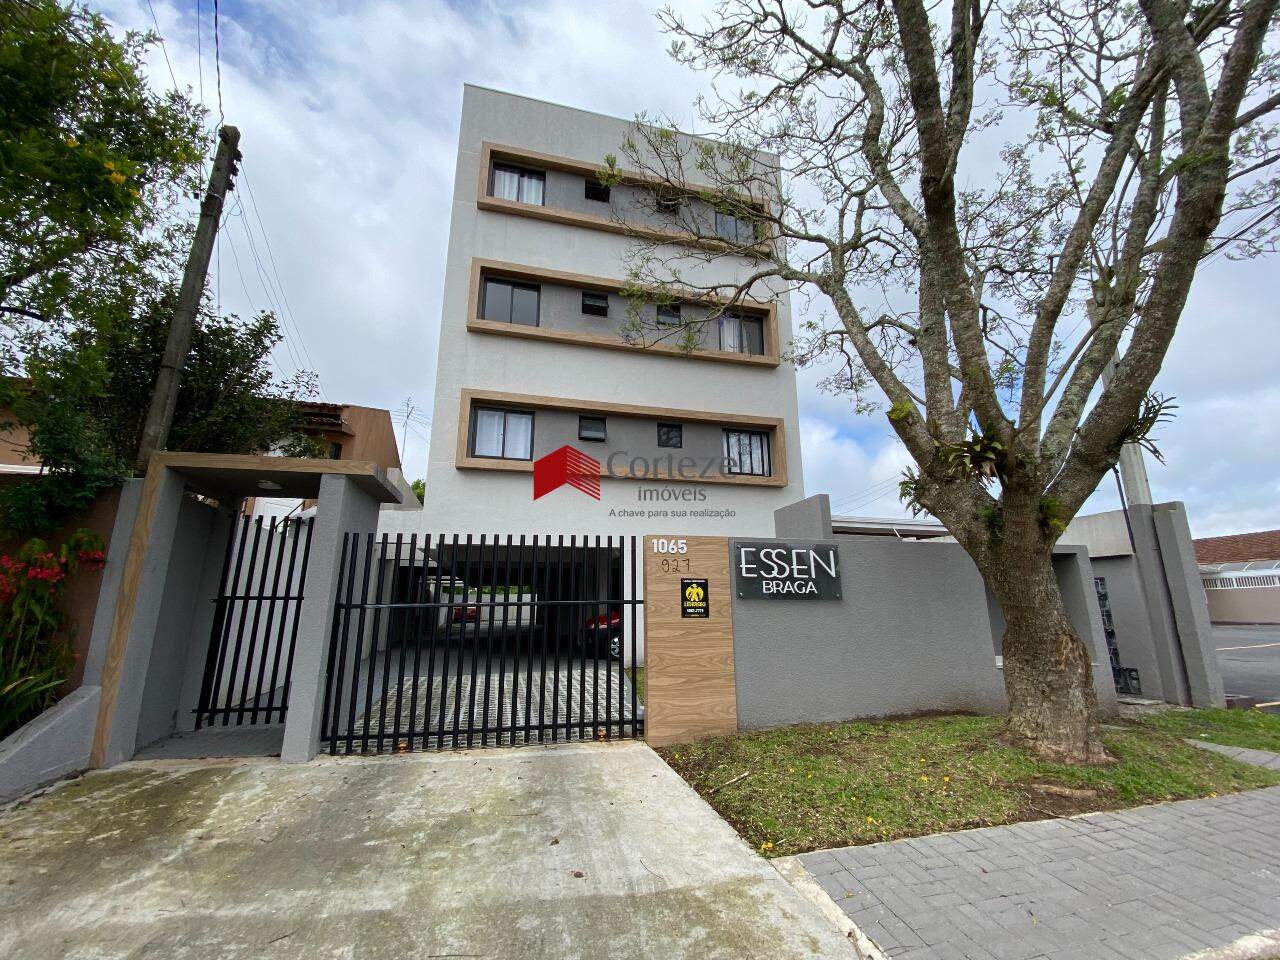 Apartamento localizado Residencial Edifício Essen Braga, no bairro Pedro Moro